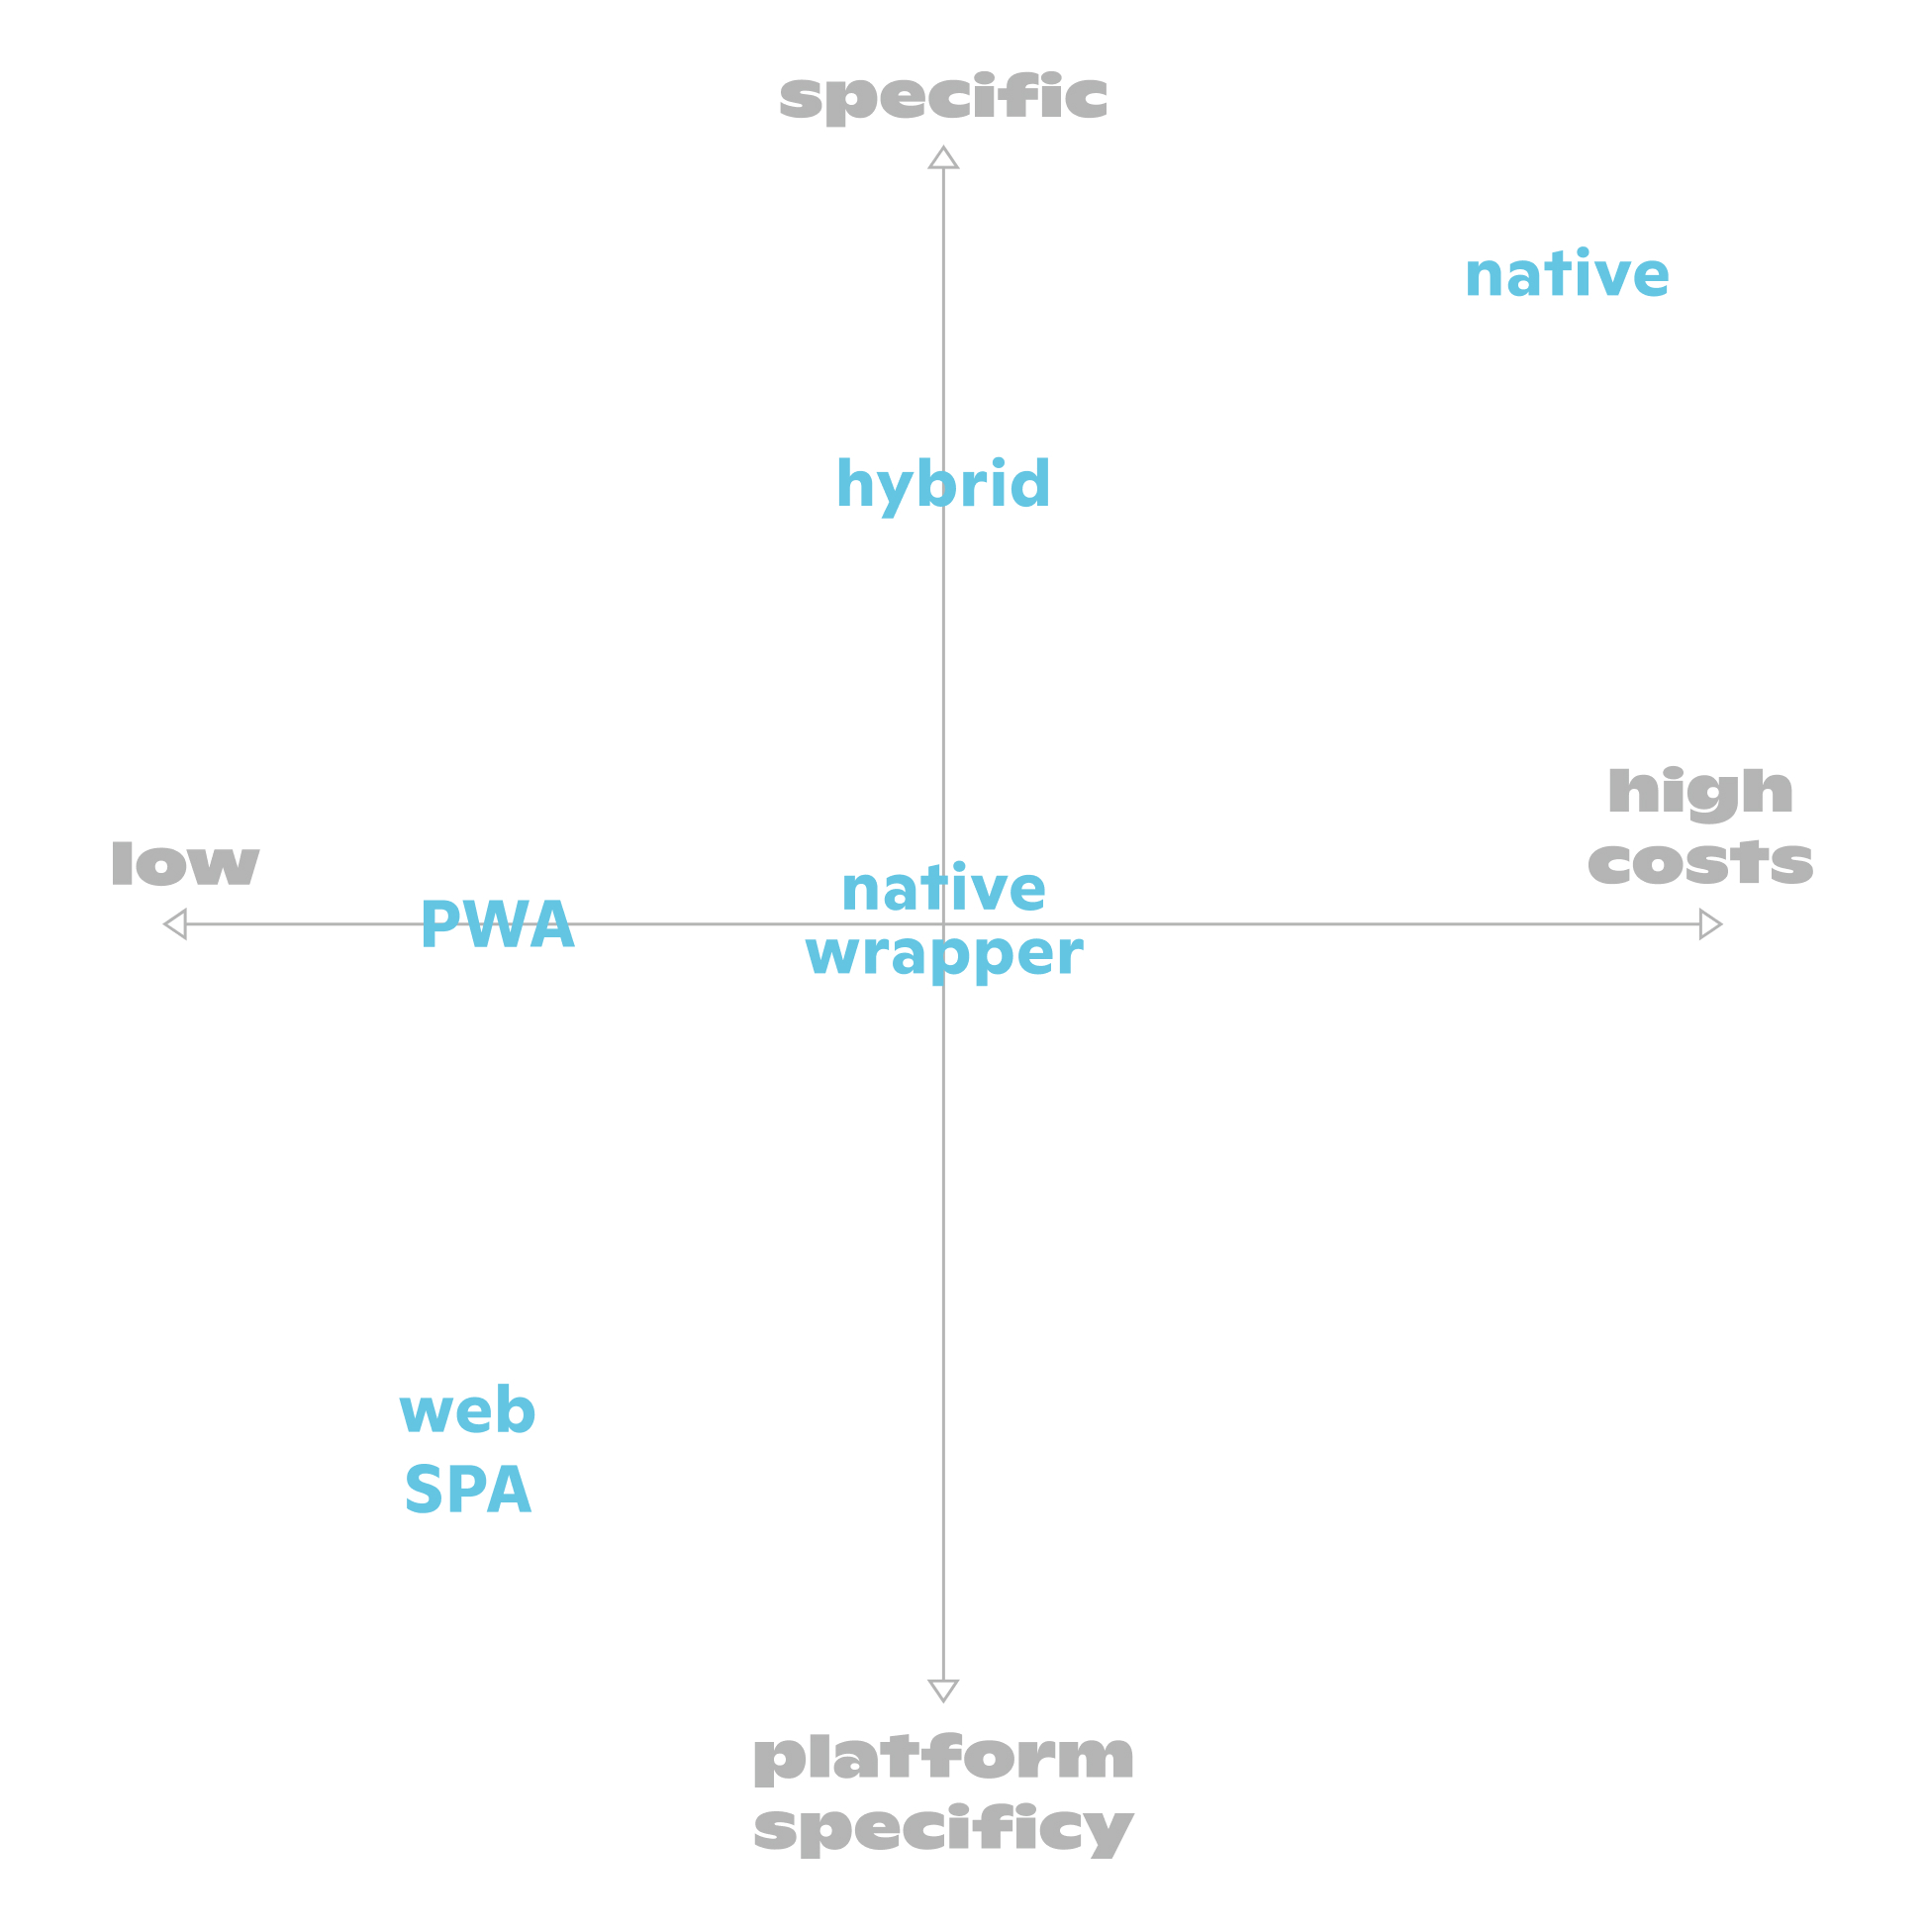 PWA, native wrapper, hybrid, native, web SPA